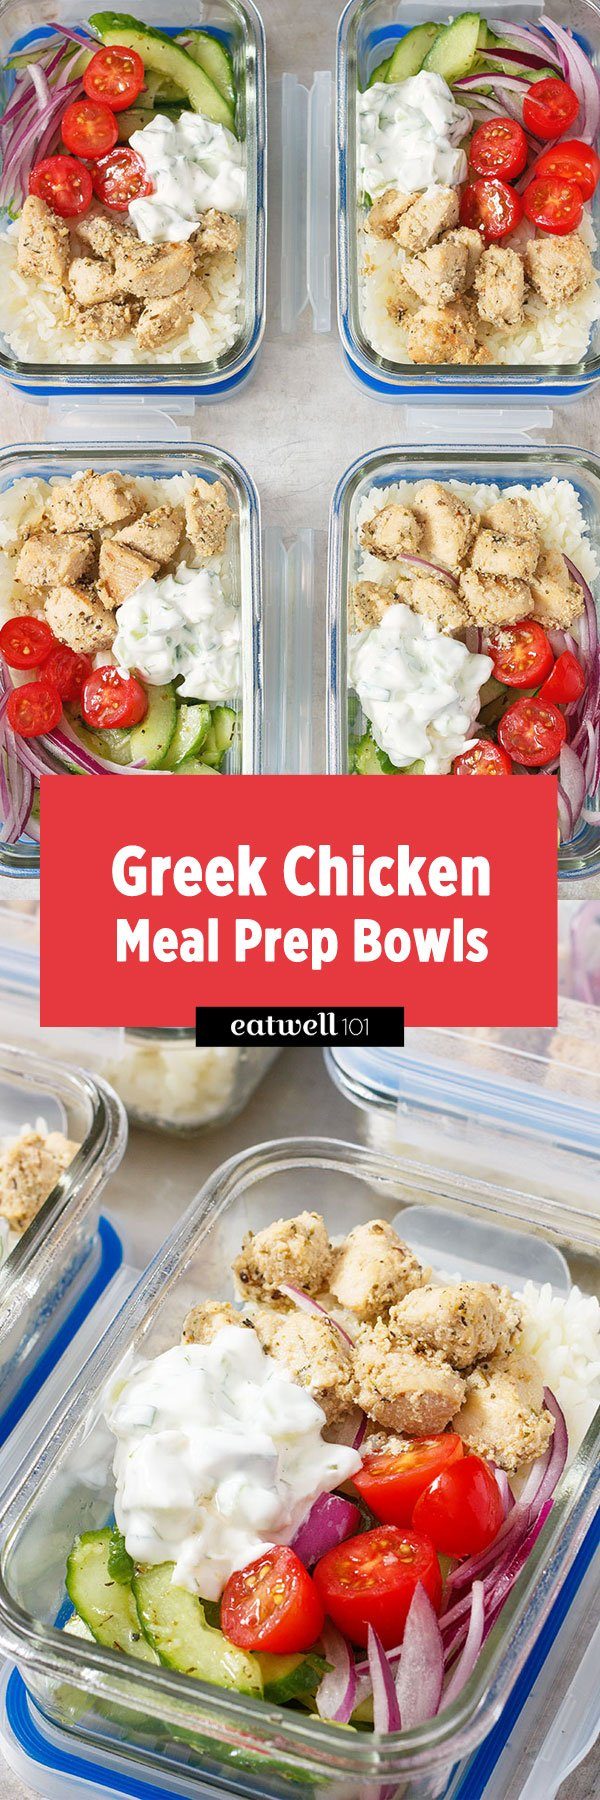 https://www.eatwell101.com/wp-content/uploads/2017/03/Greek-Chicken-Meal-Prep-Bowls.jpg